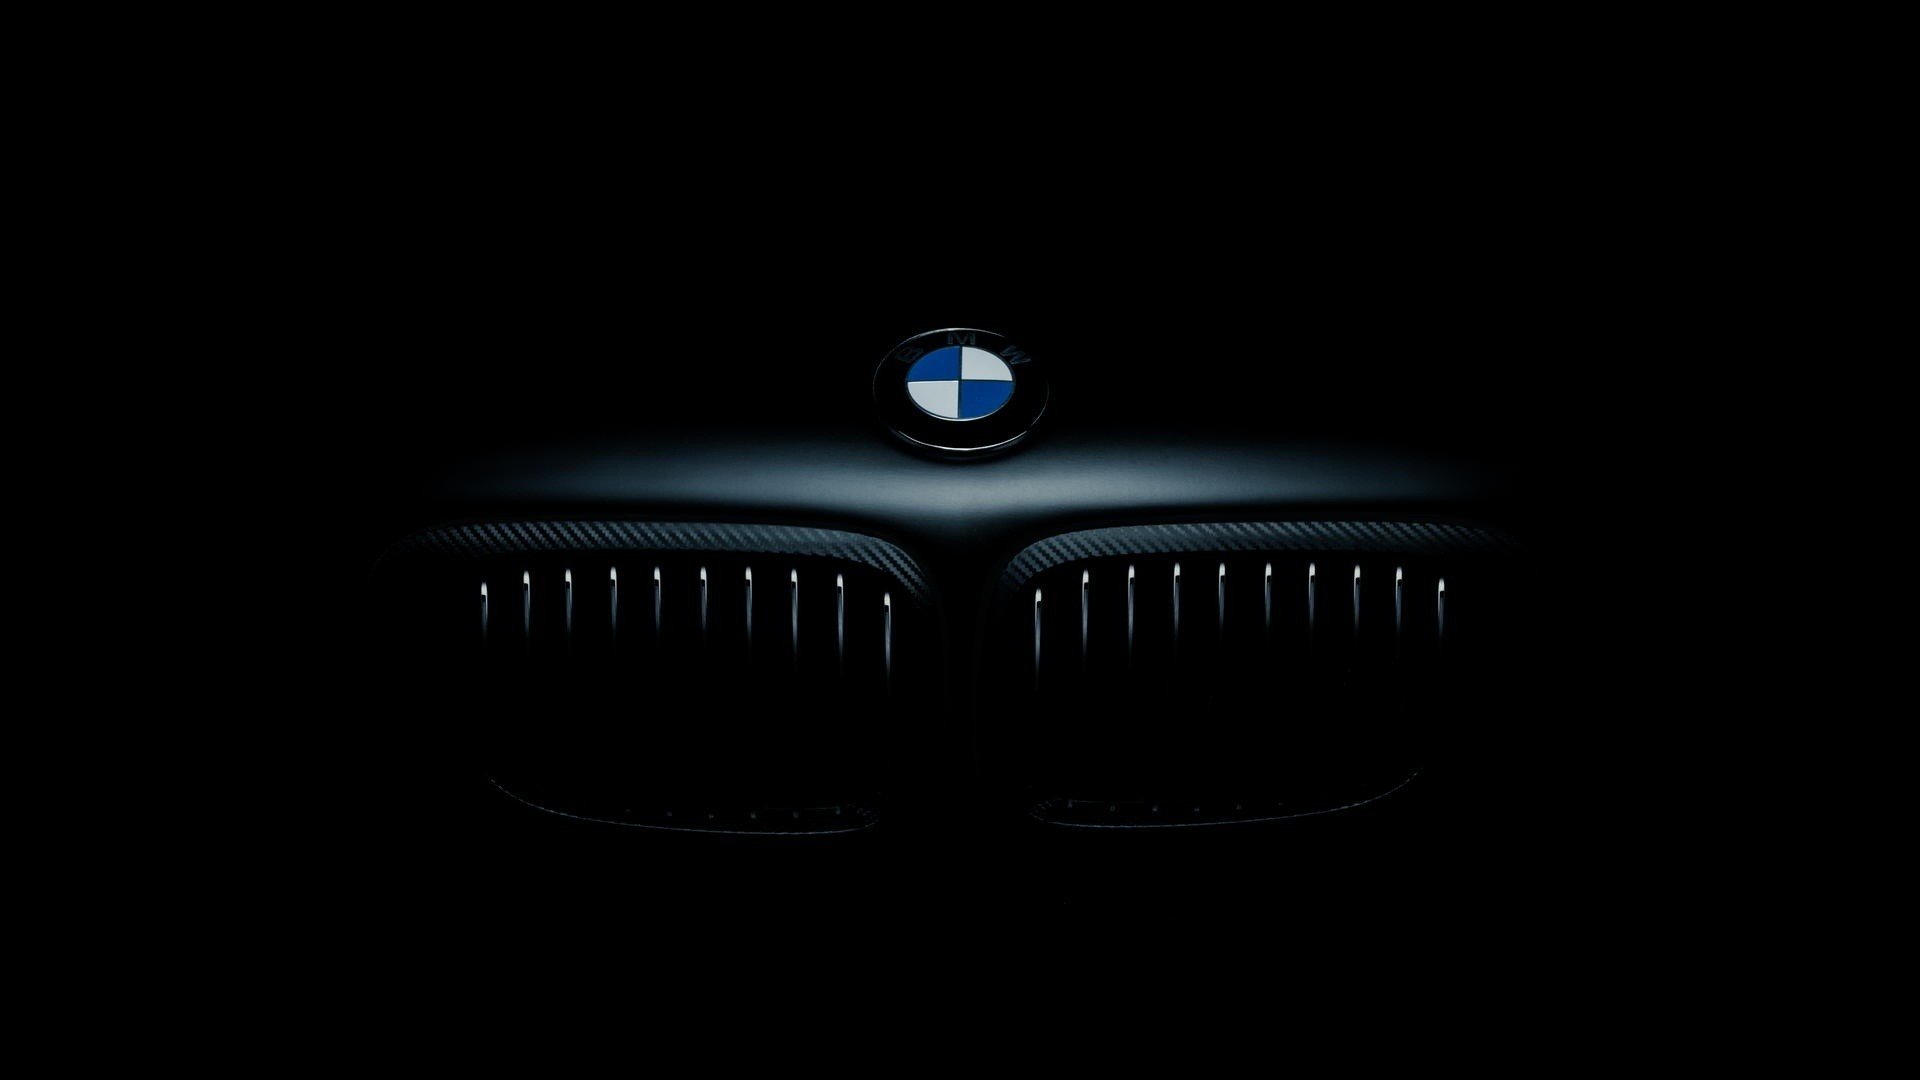 BMW logo car dark wallpaper 1920x1080 439468 WallpaperUP